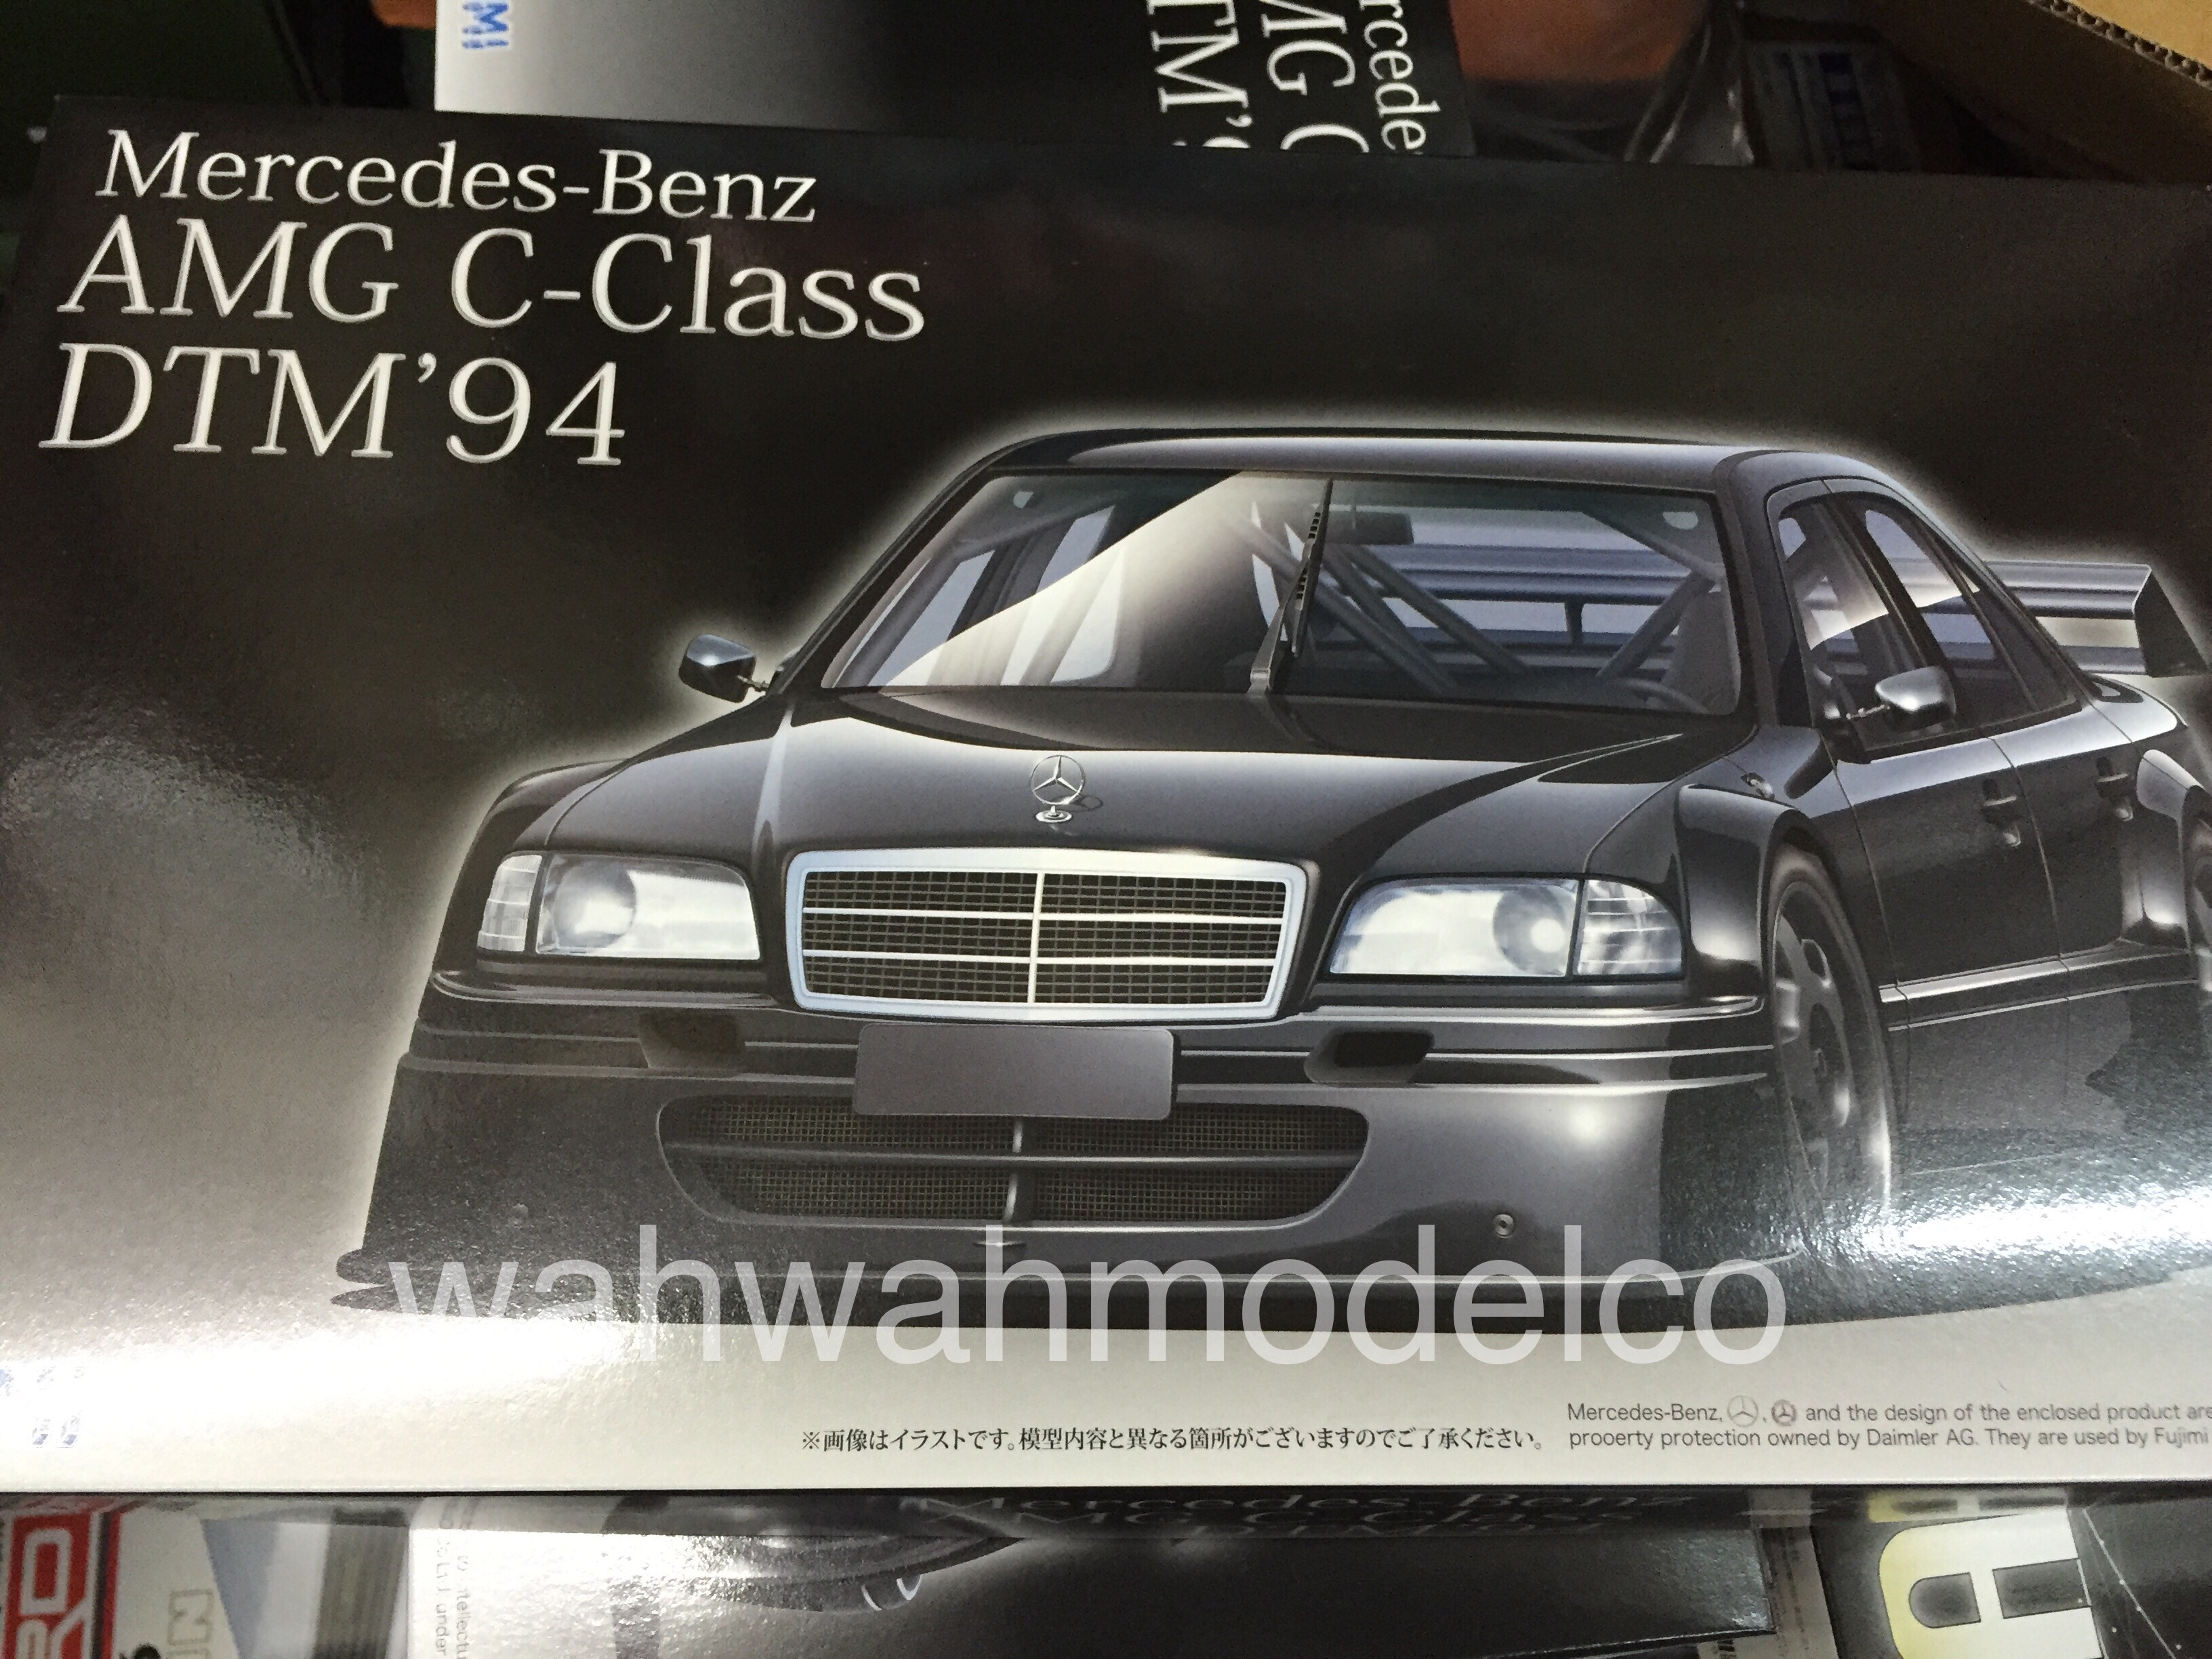 Fujimi RS-62 Mercedes-Benz AMG C-Class DTM'94 kit 1/24 scale 